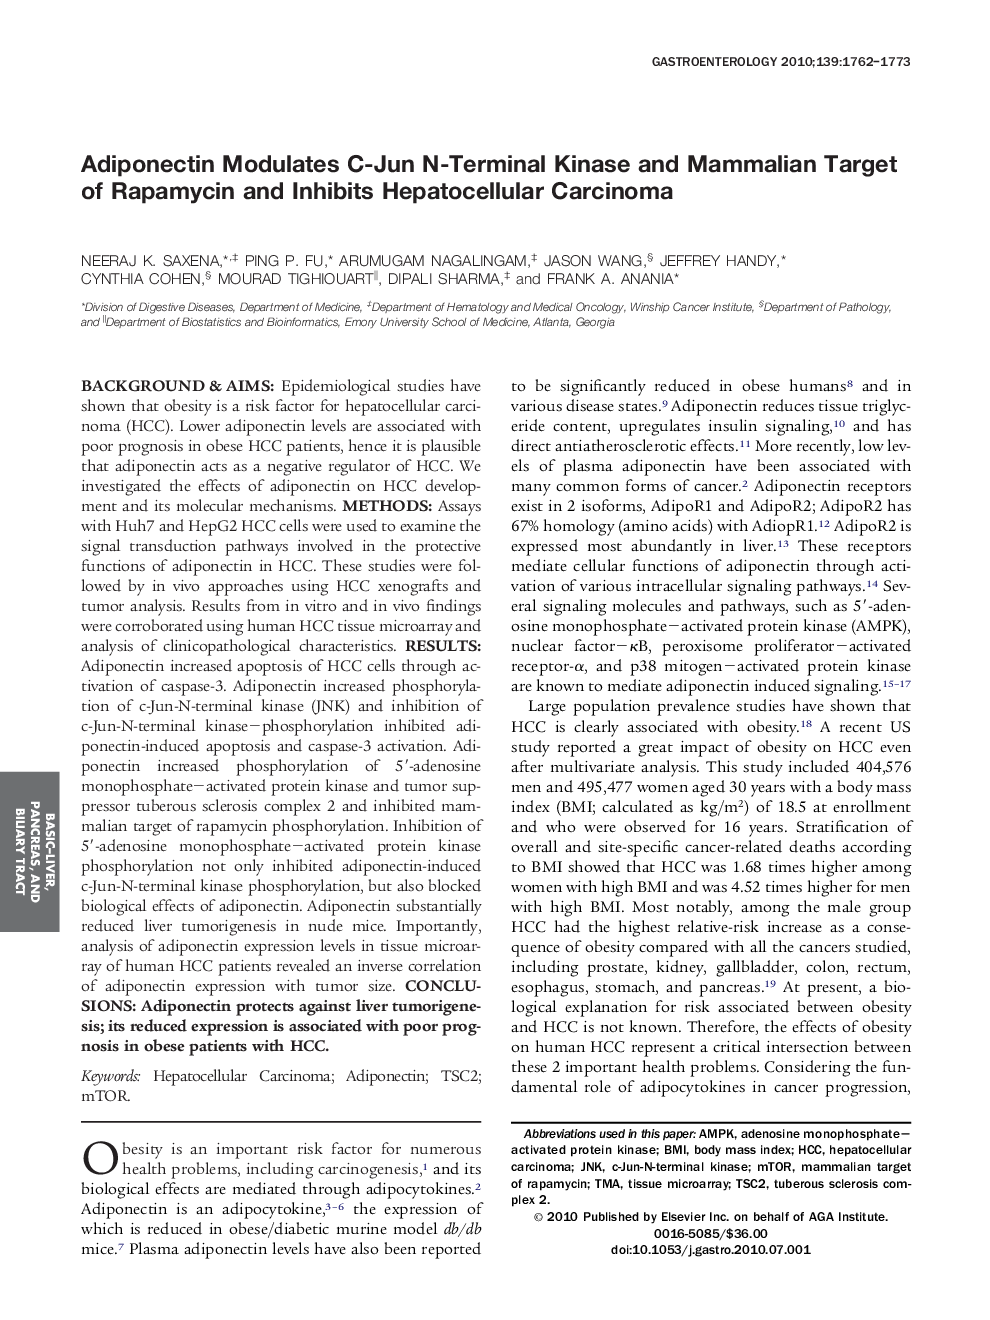 Adiponectin Modulates C-Jun N-Terminal Kinase and Mammalian Target of Rapamycin and Inhibits Hepatocellular Carcinoma